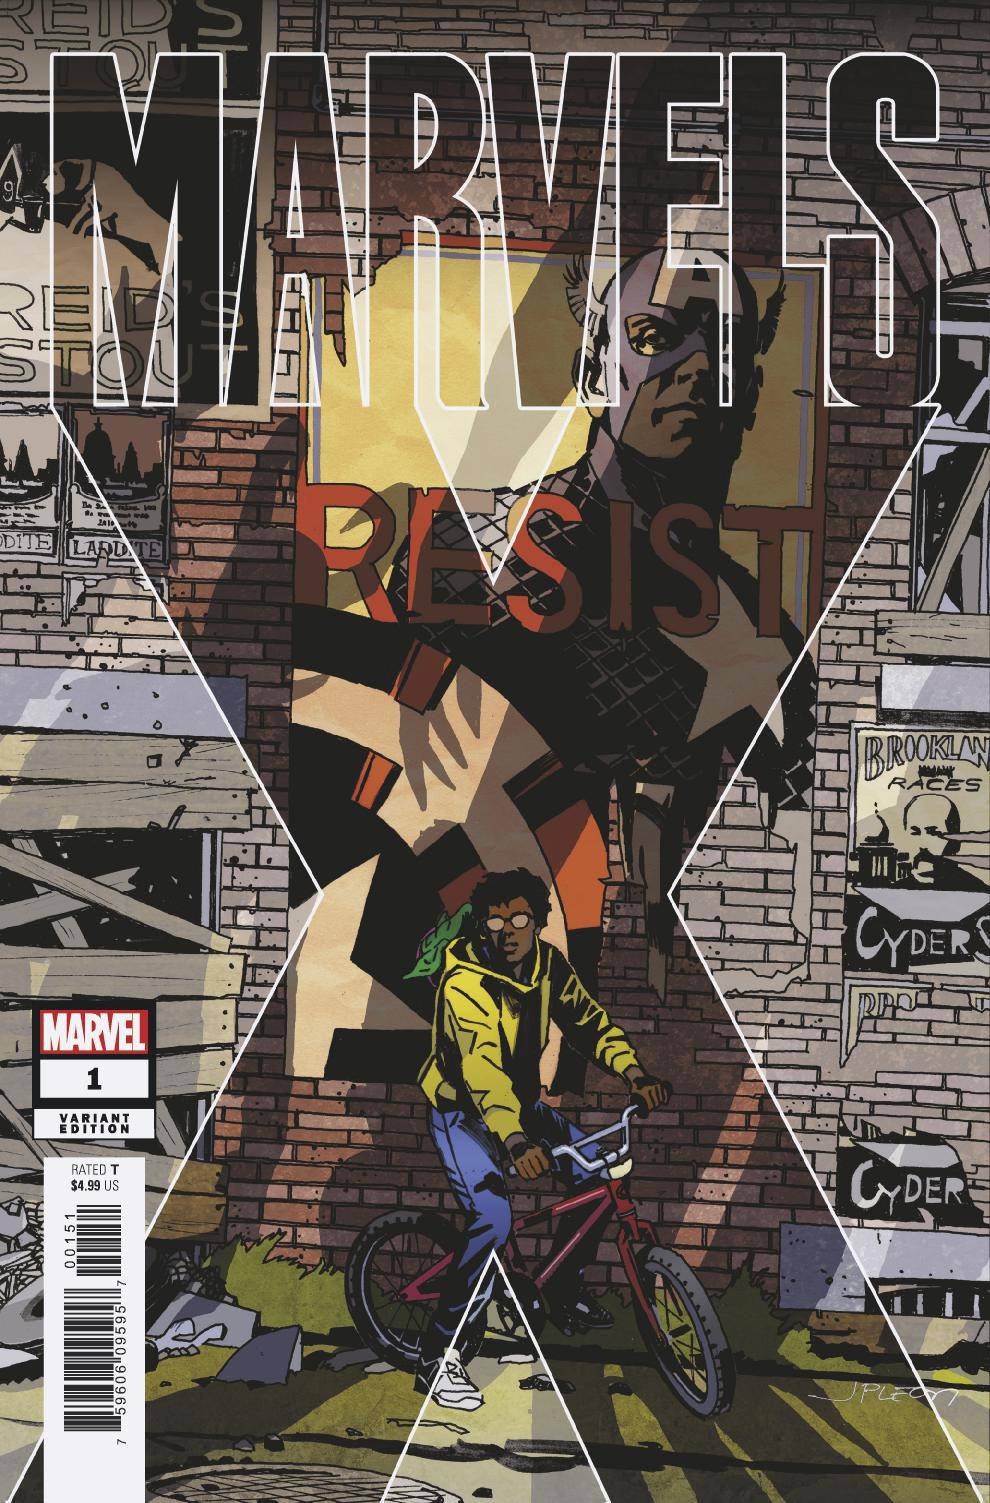 Marvels X #1 - State of Comics